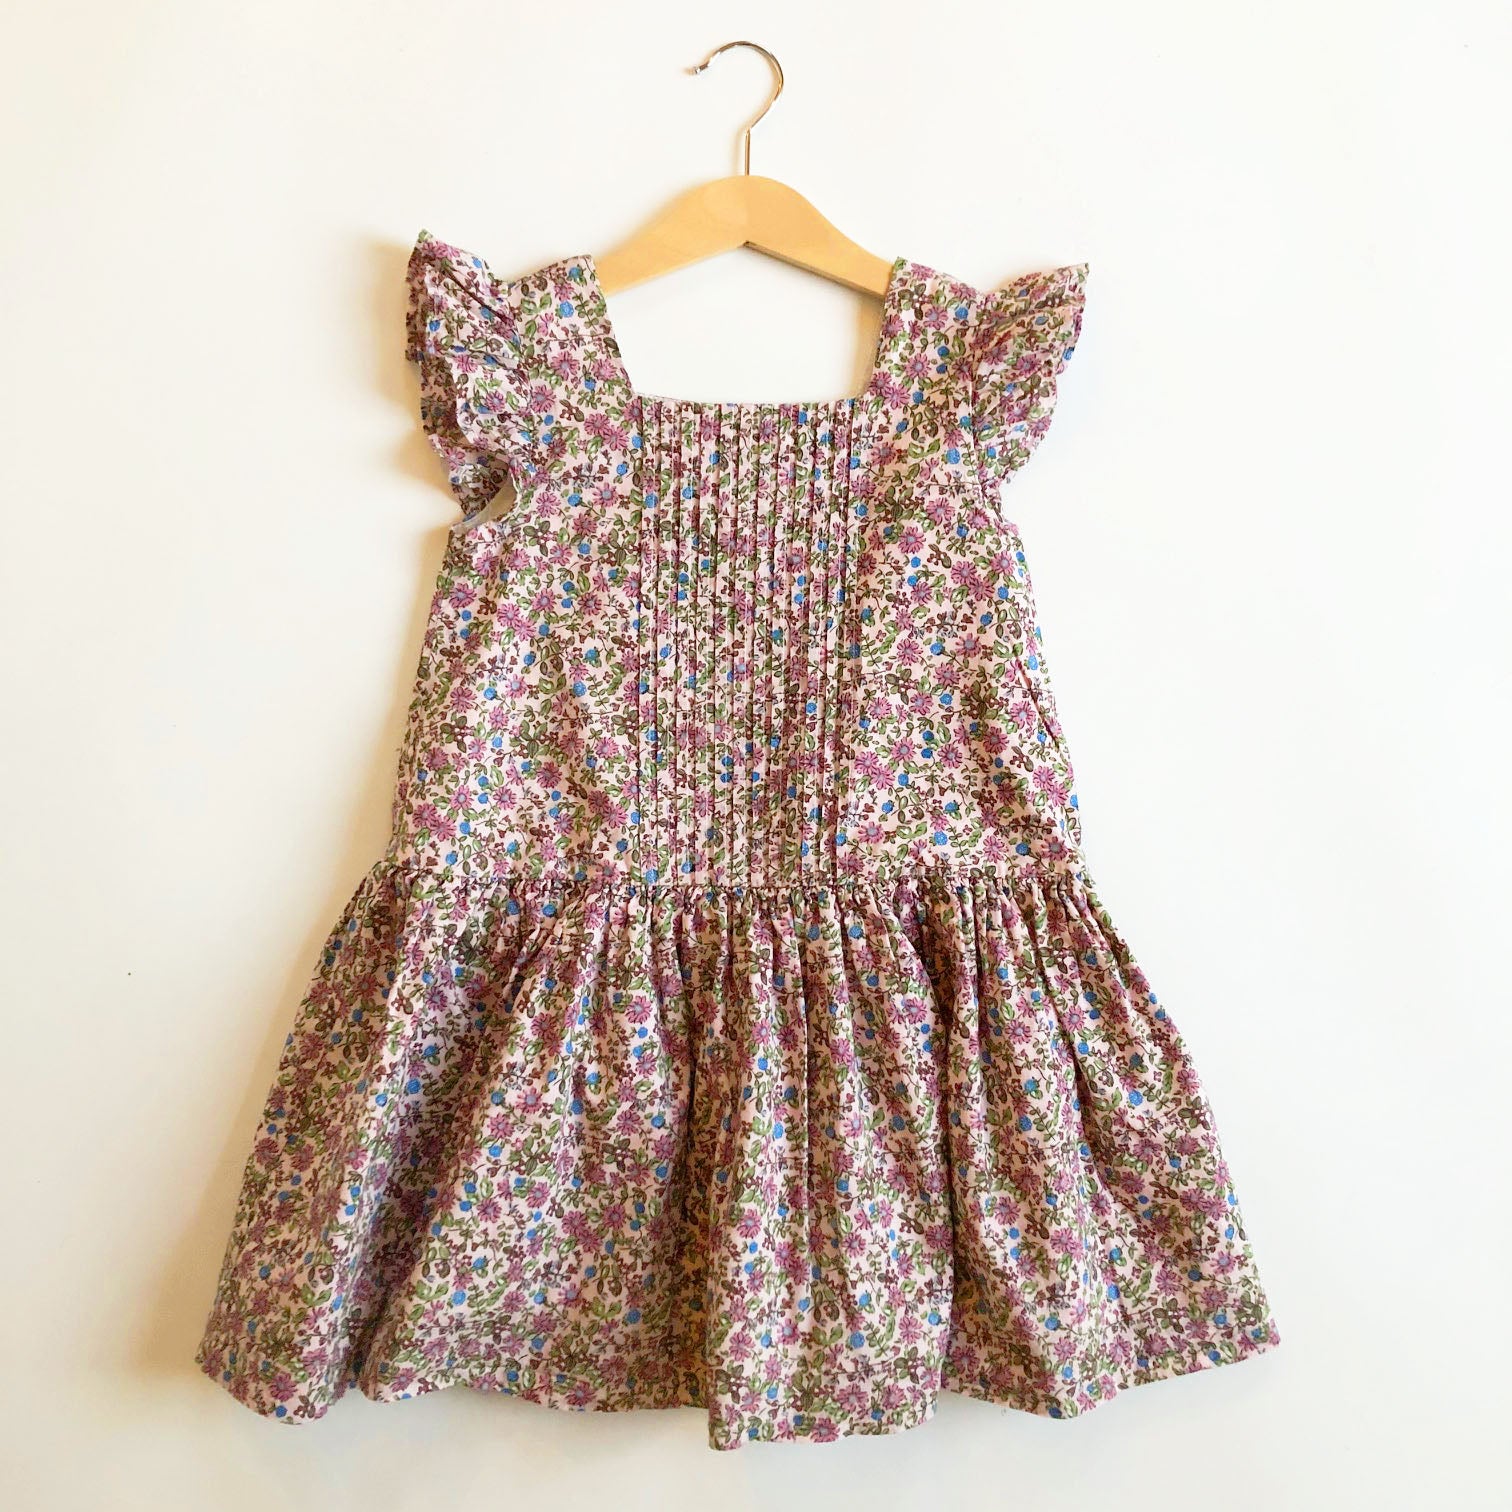 Laura Ashley vintage dress size 4